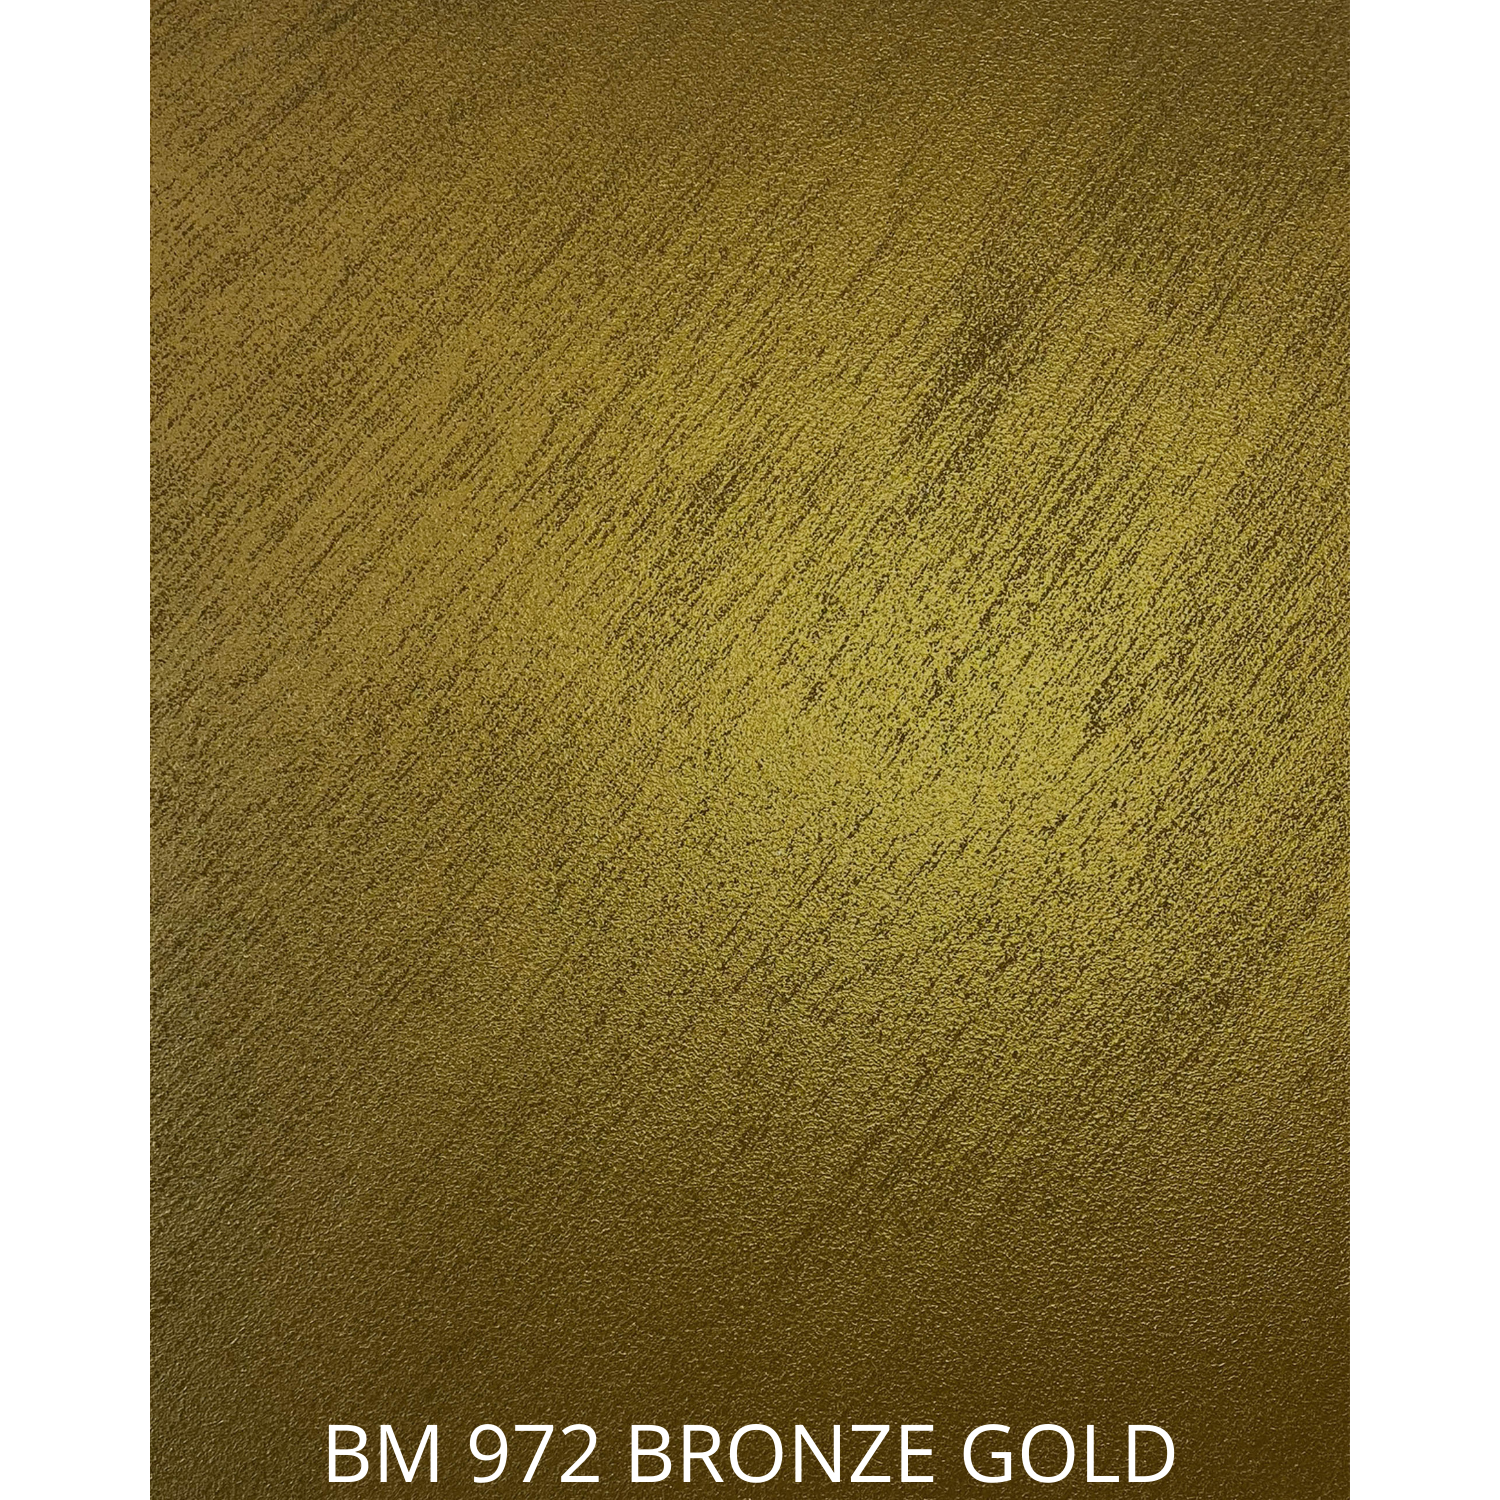 BM 972 BRONZE GOLD